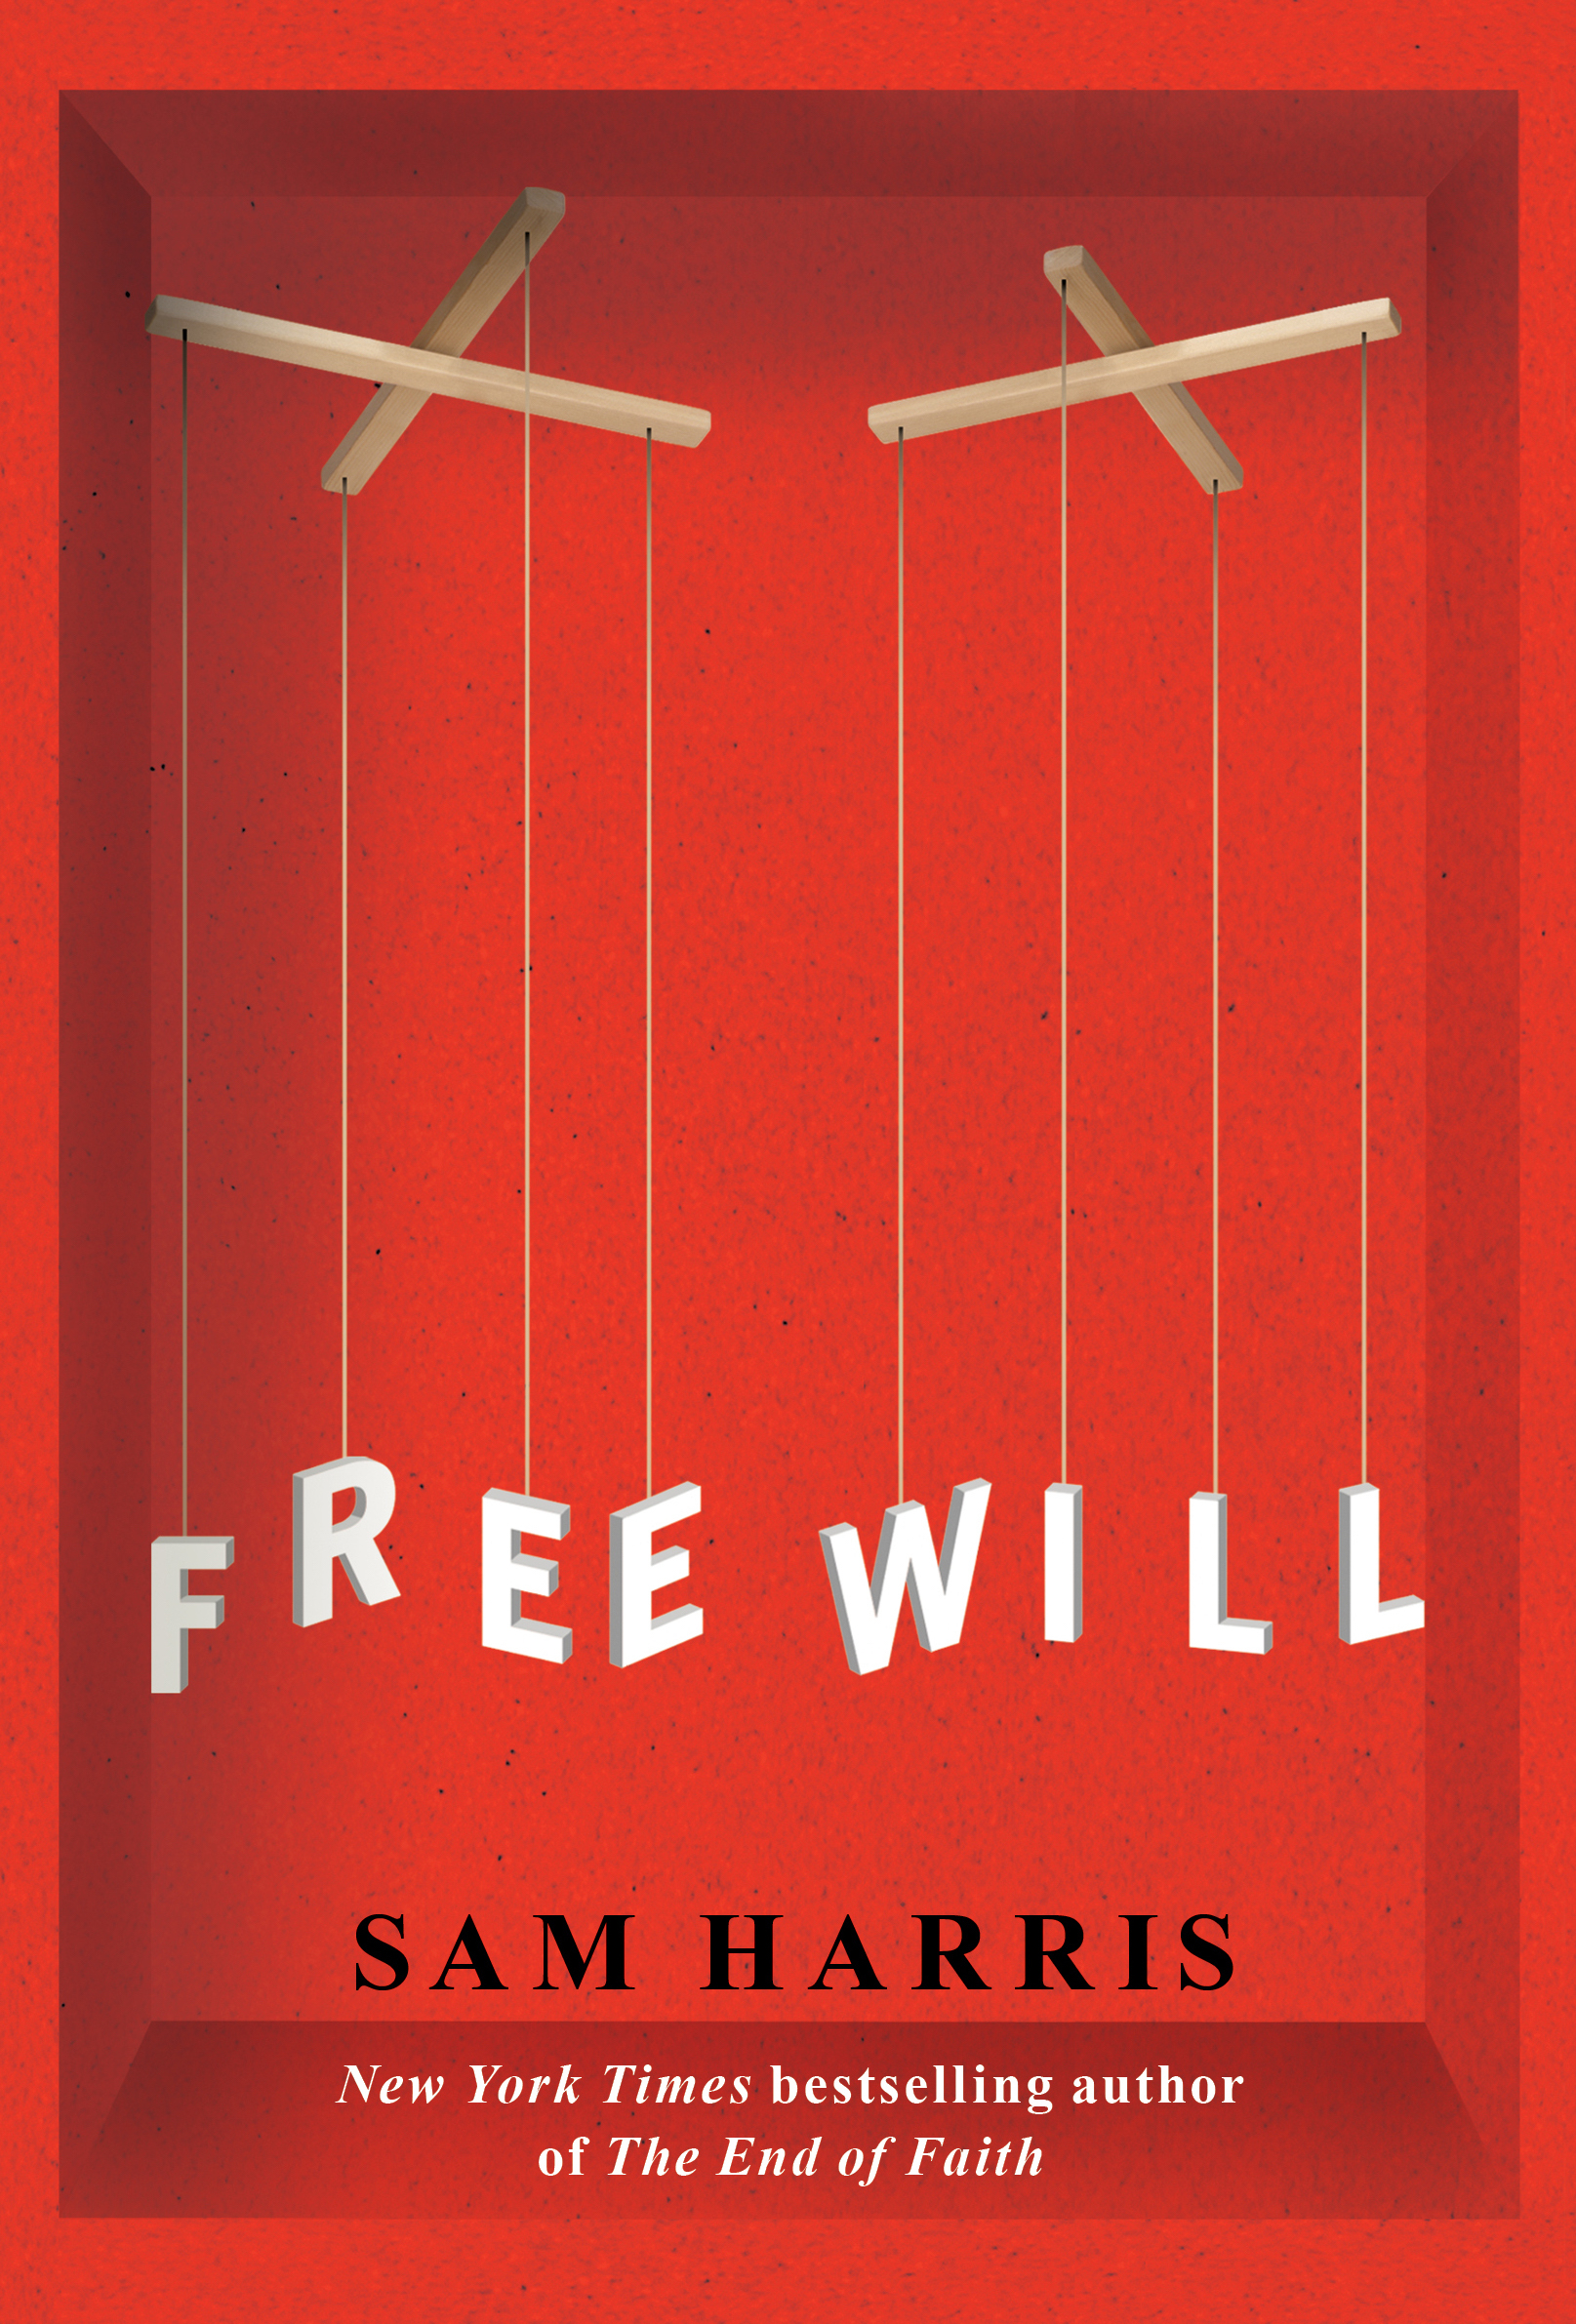 Free Will by Sam Harris PDF Download